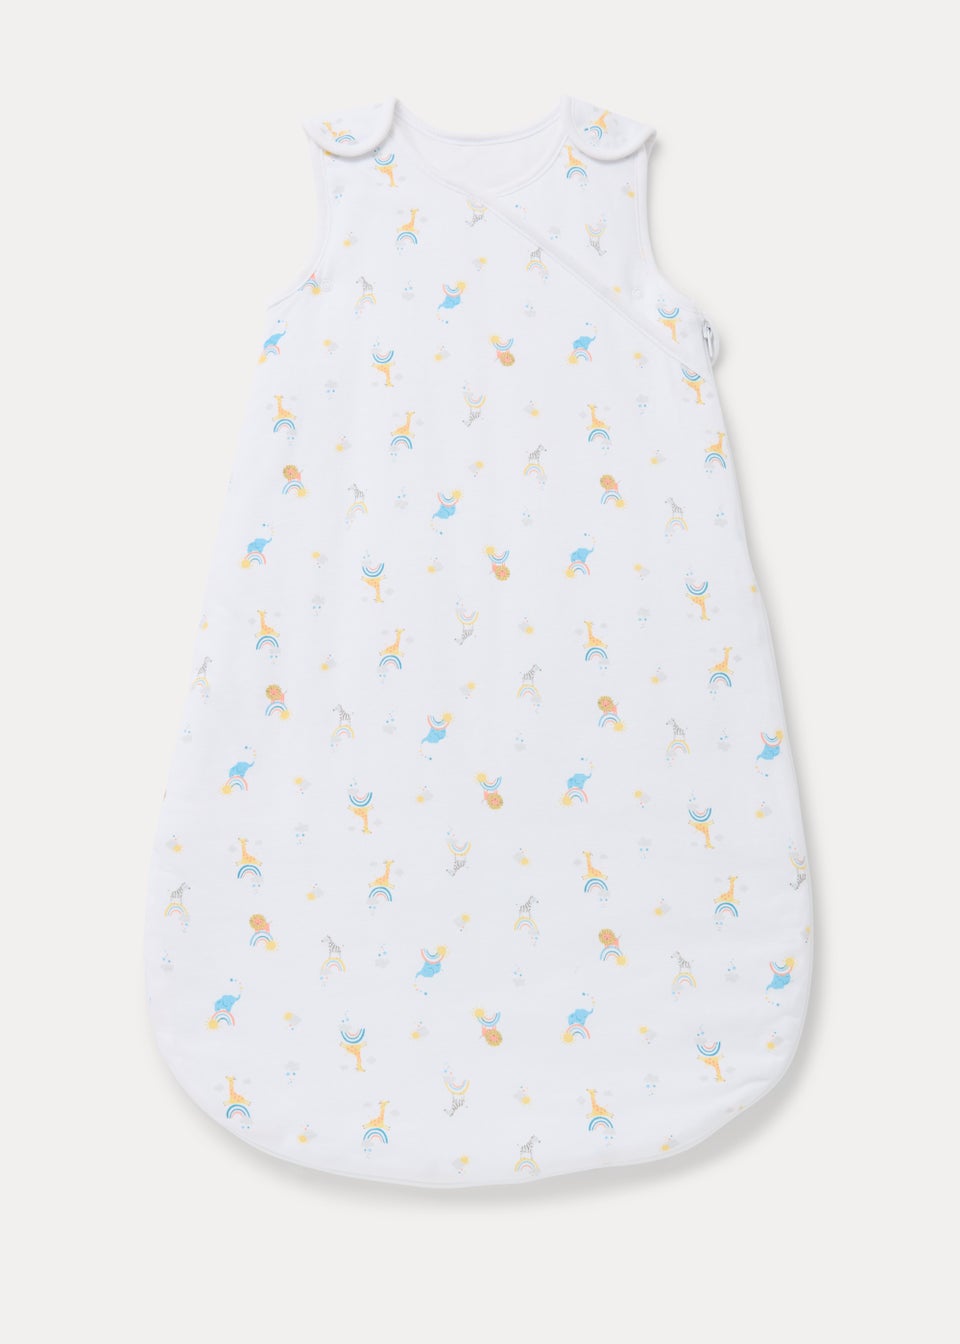 White Rainbow Baby Sleeping Bag 2.5 Tog (Newborn-18mths)